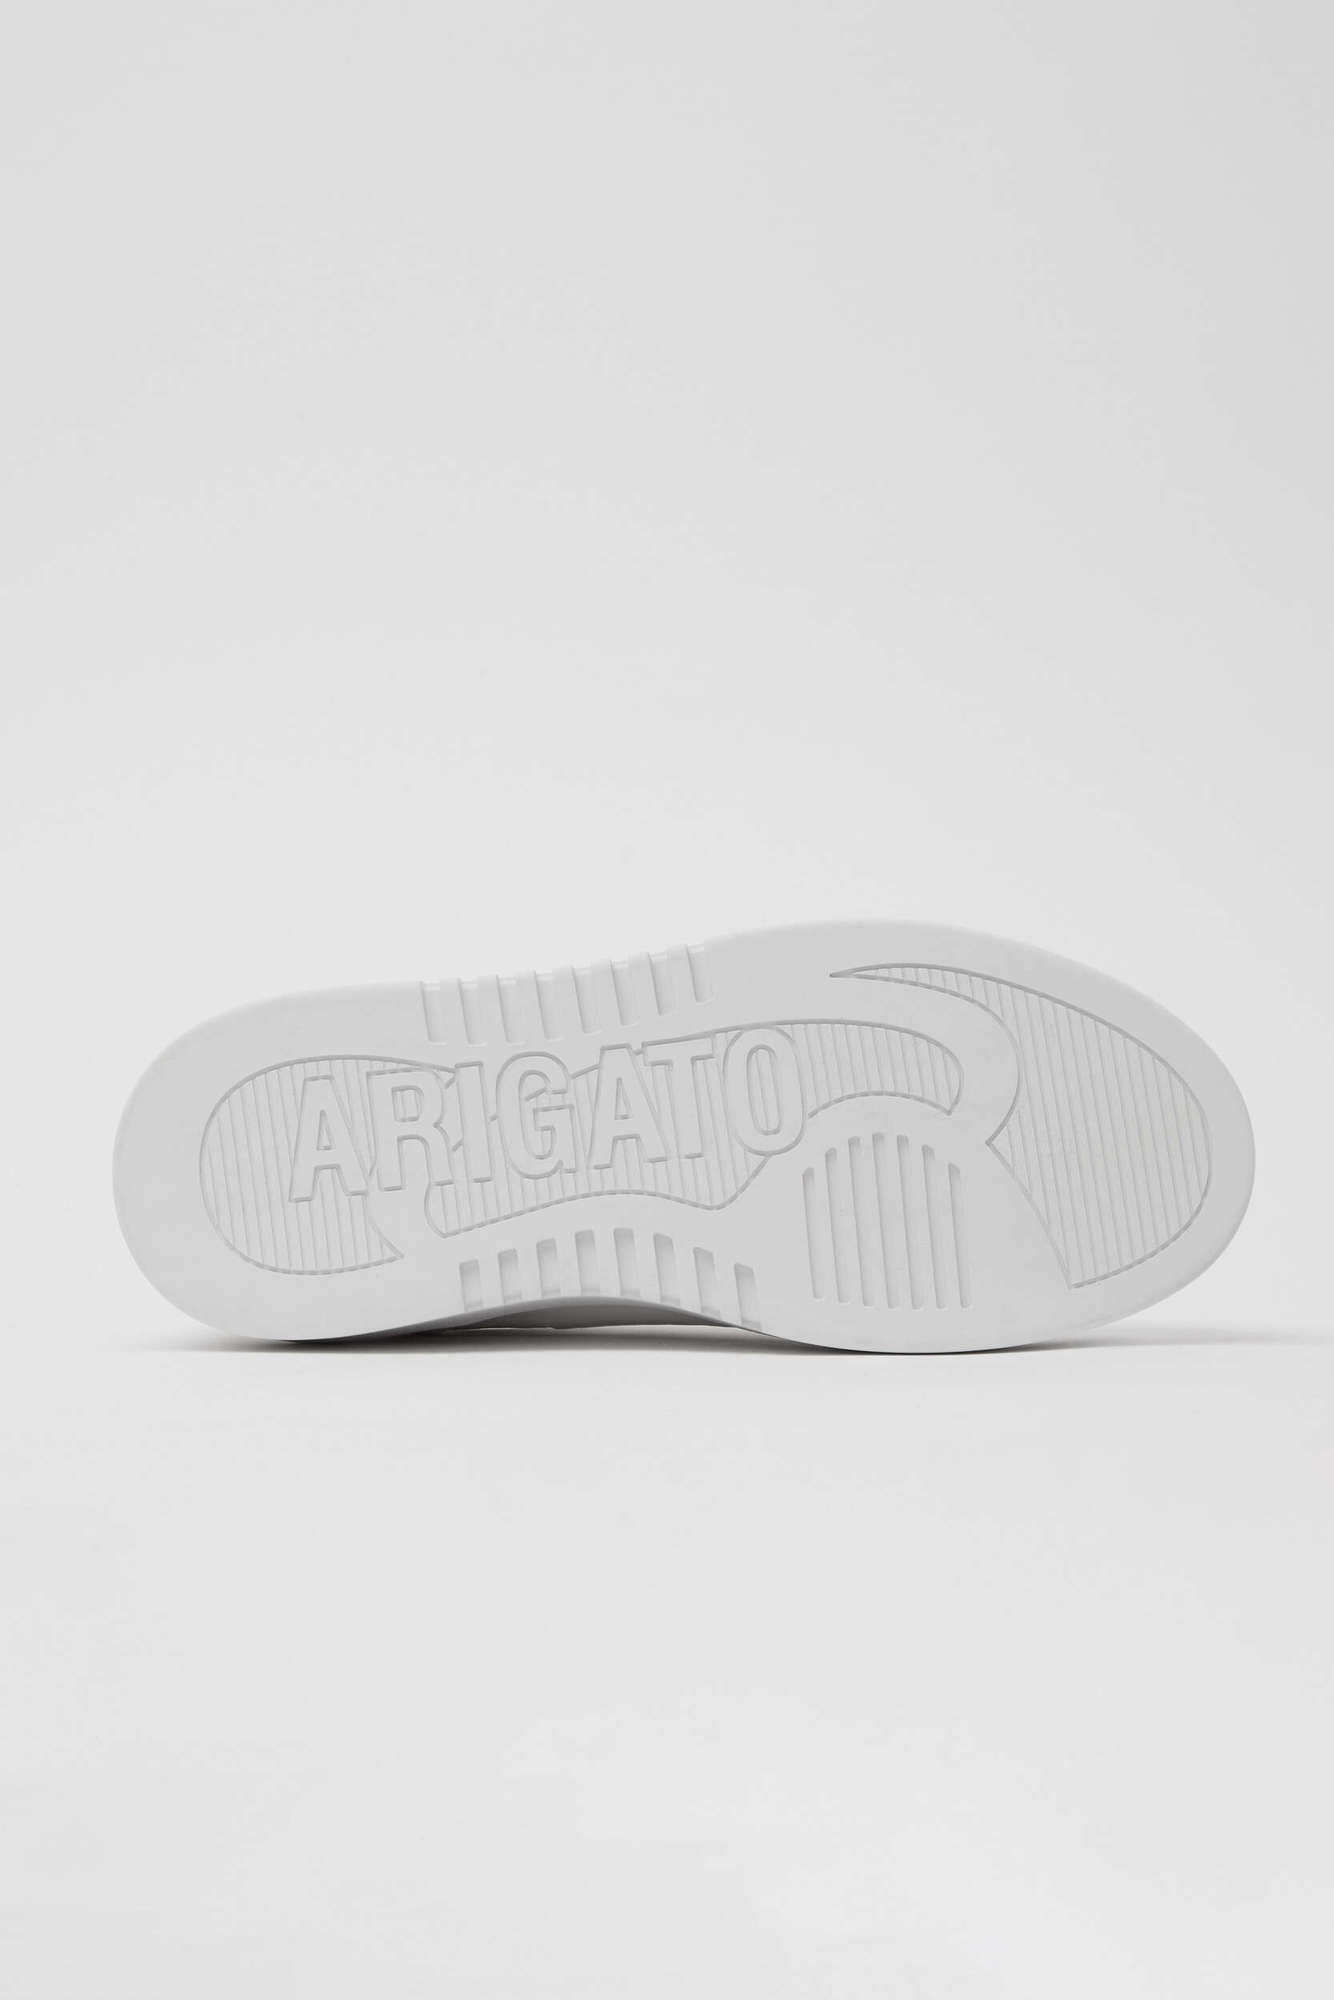 AXEL ARIGATO Orbit Vintage Sneaker in White 41